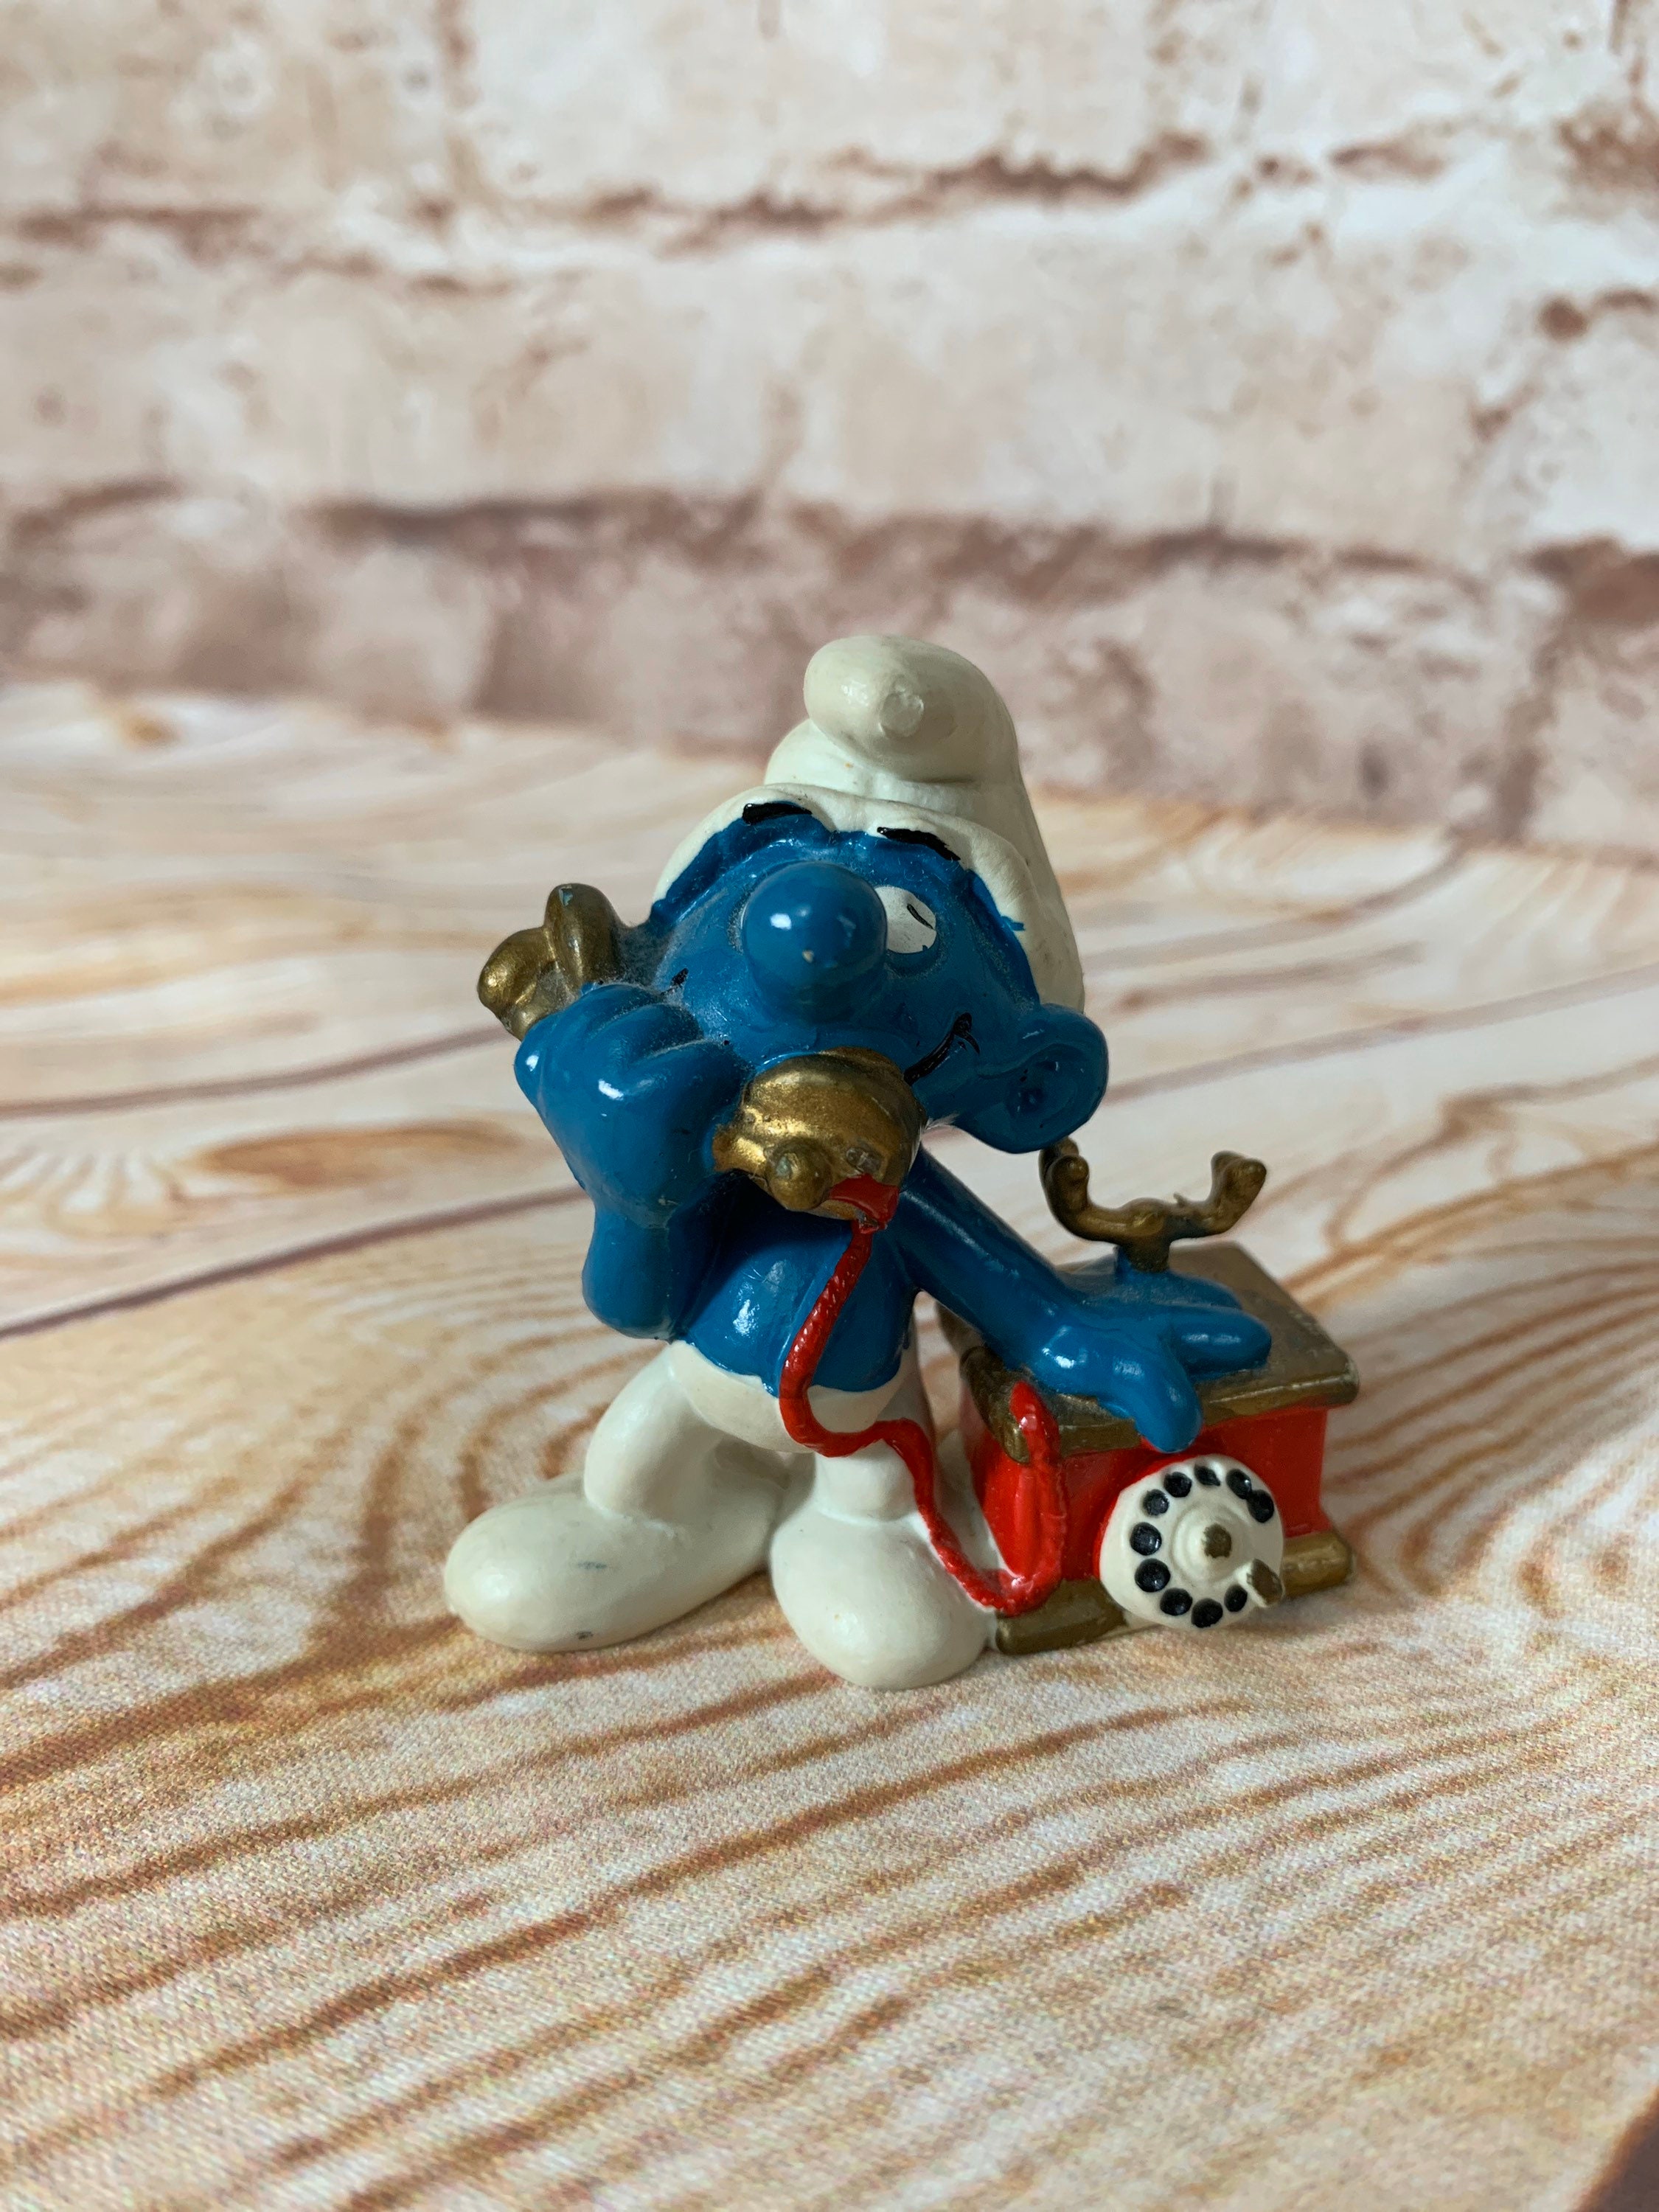 miniature smurf figurines